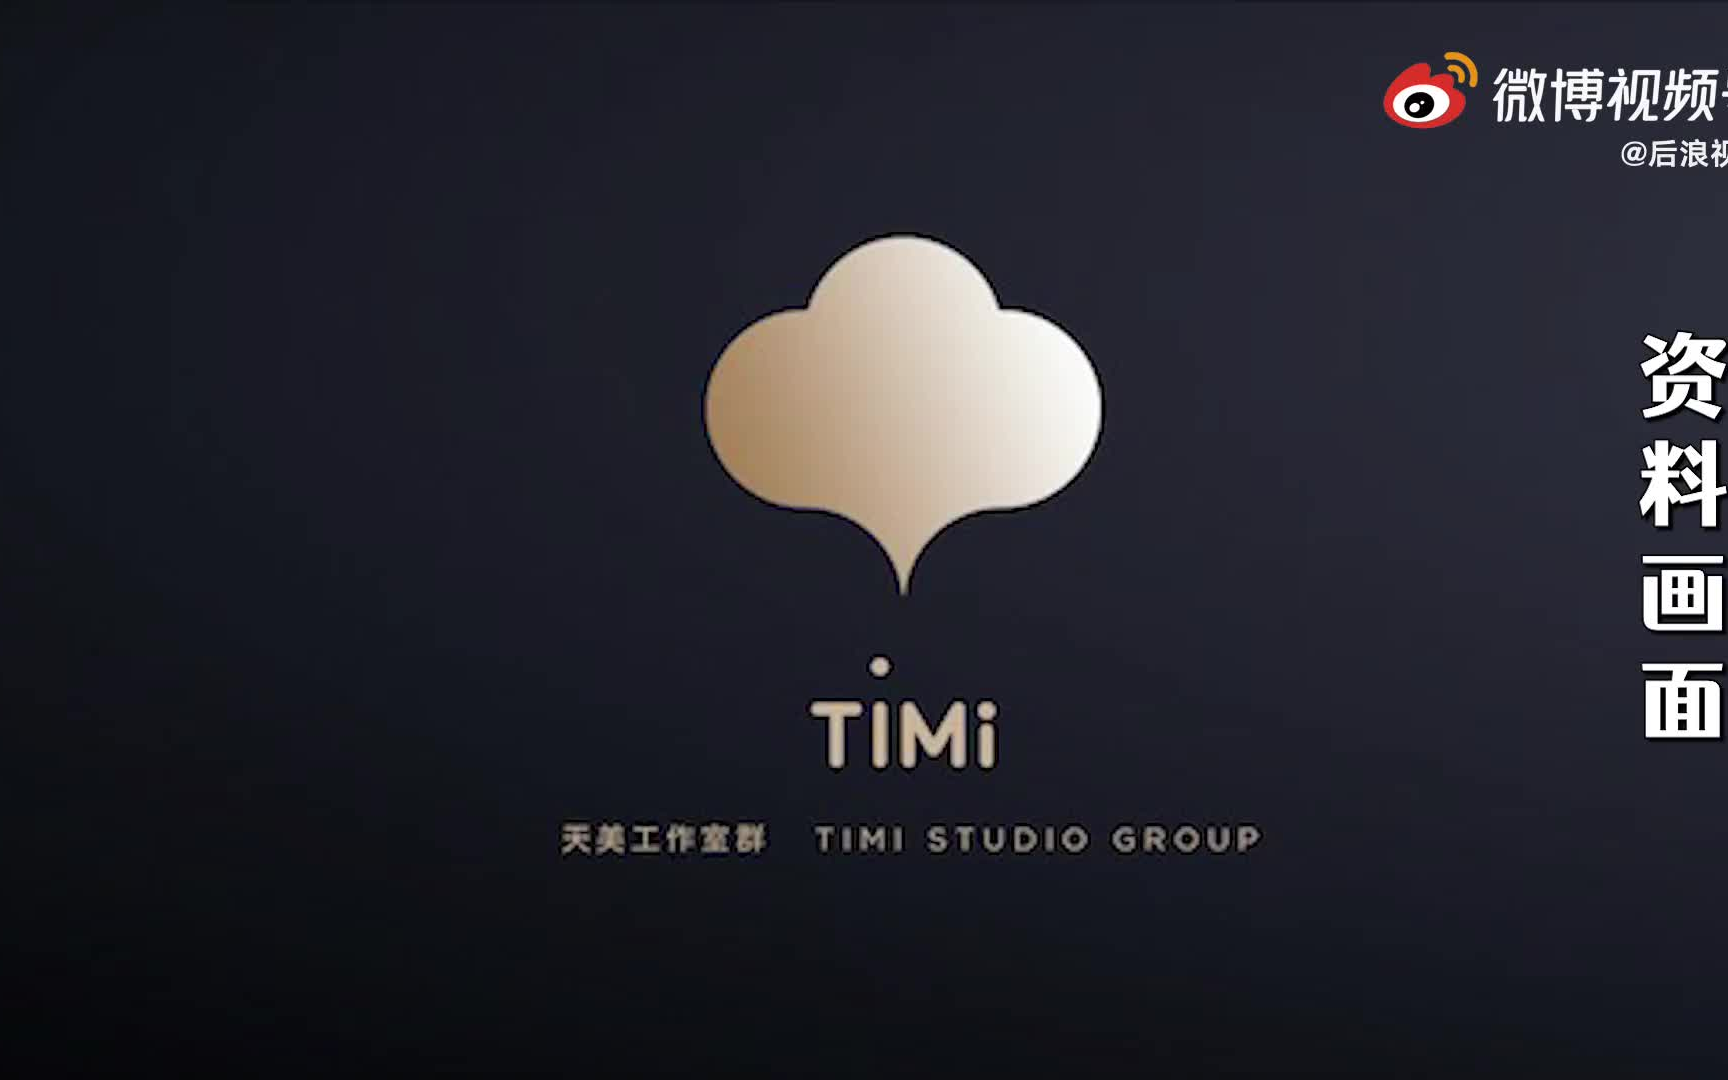 timi studio group games